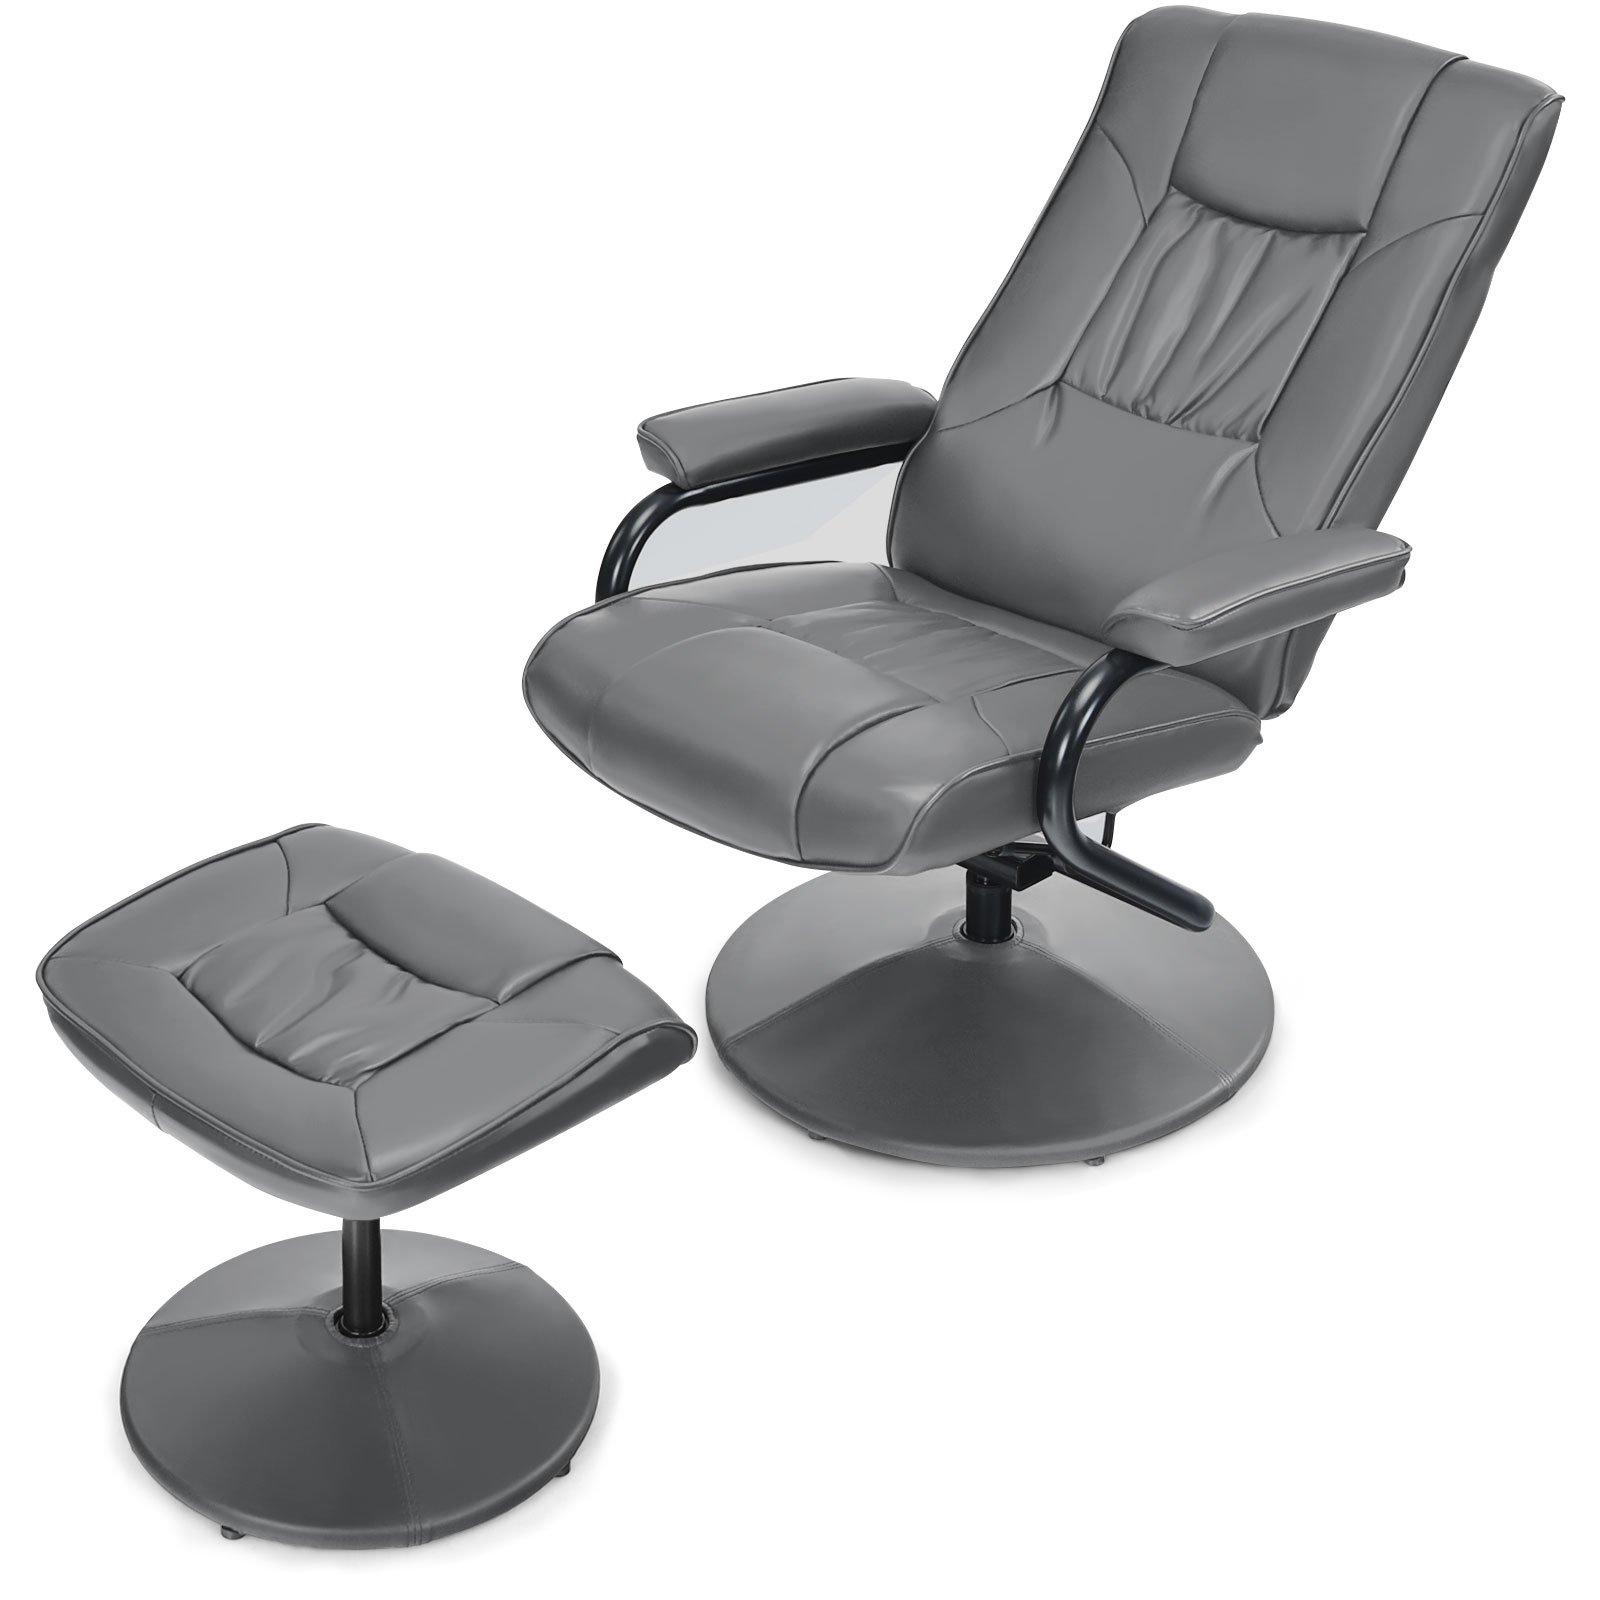 360 Swivel Recliner & Ottoman Set Lounge Chair W/ Adjustable Backrest & Padded Armrests